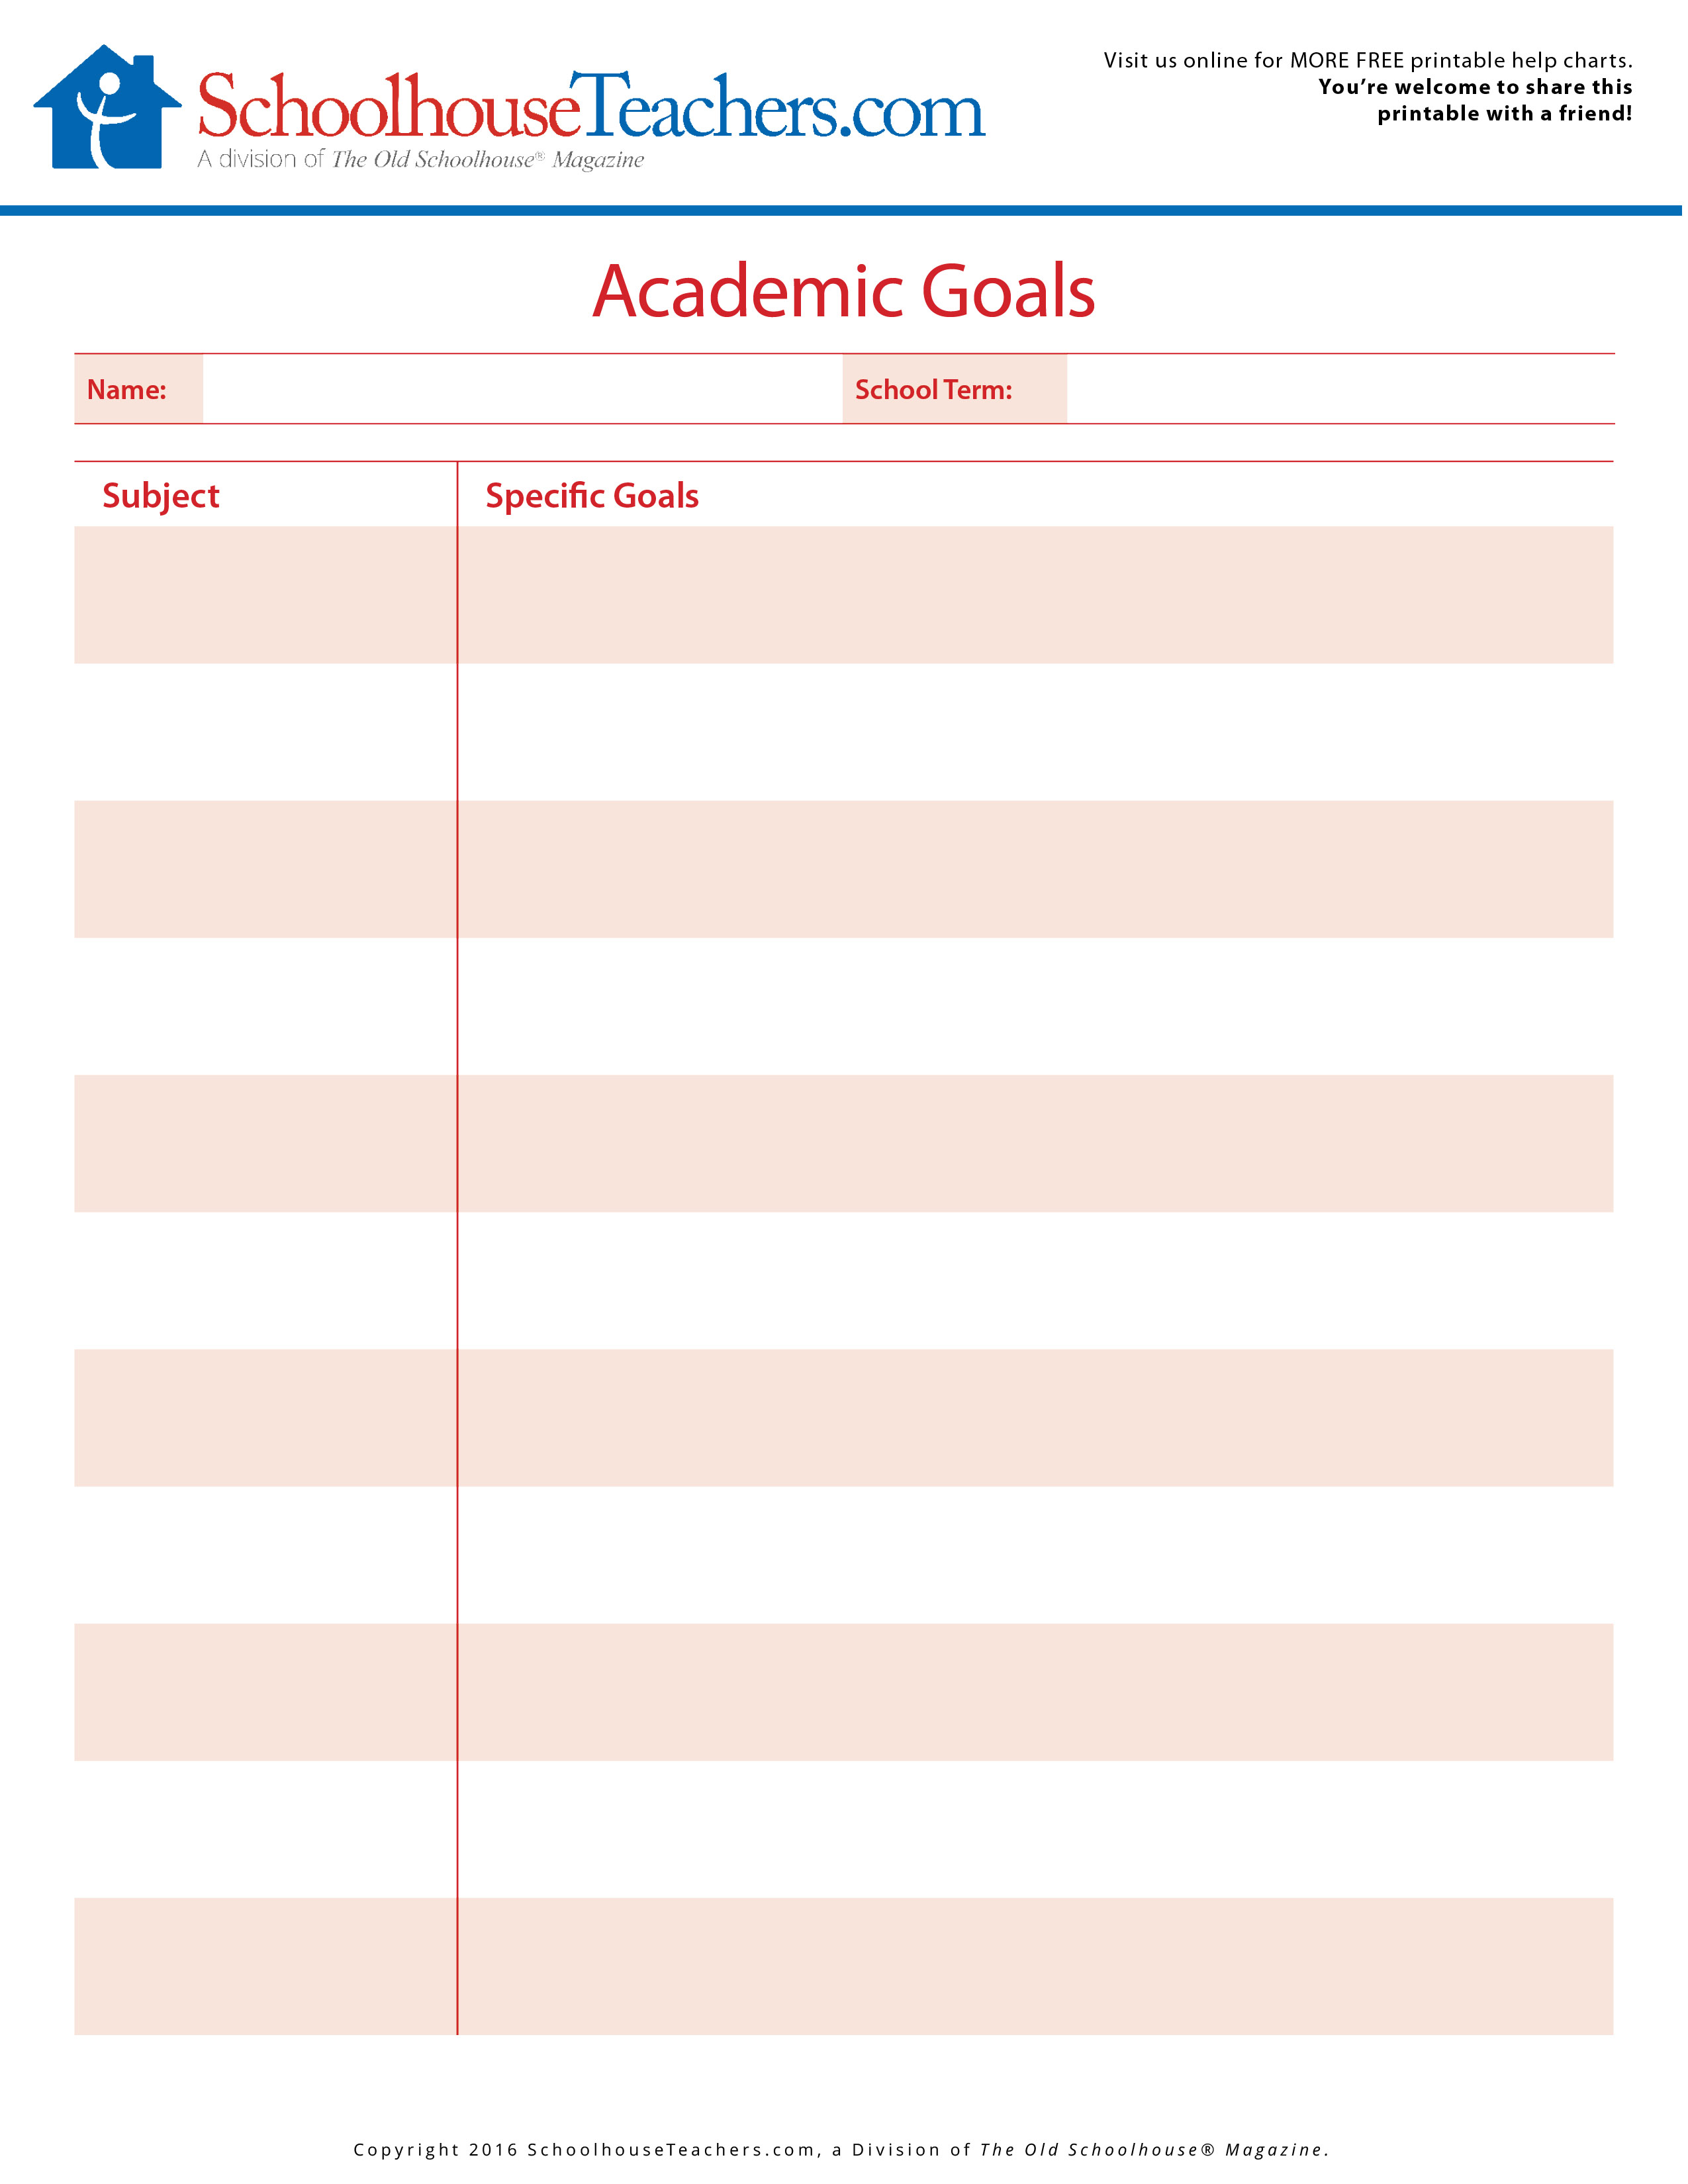 Printable Goal Charts For Adults